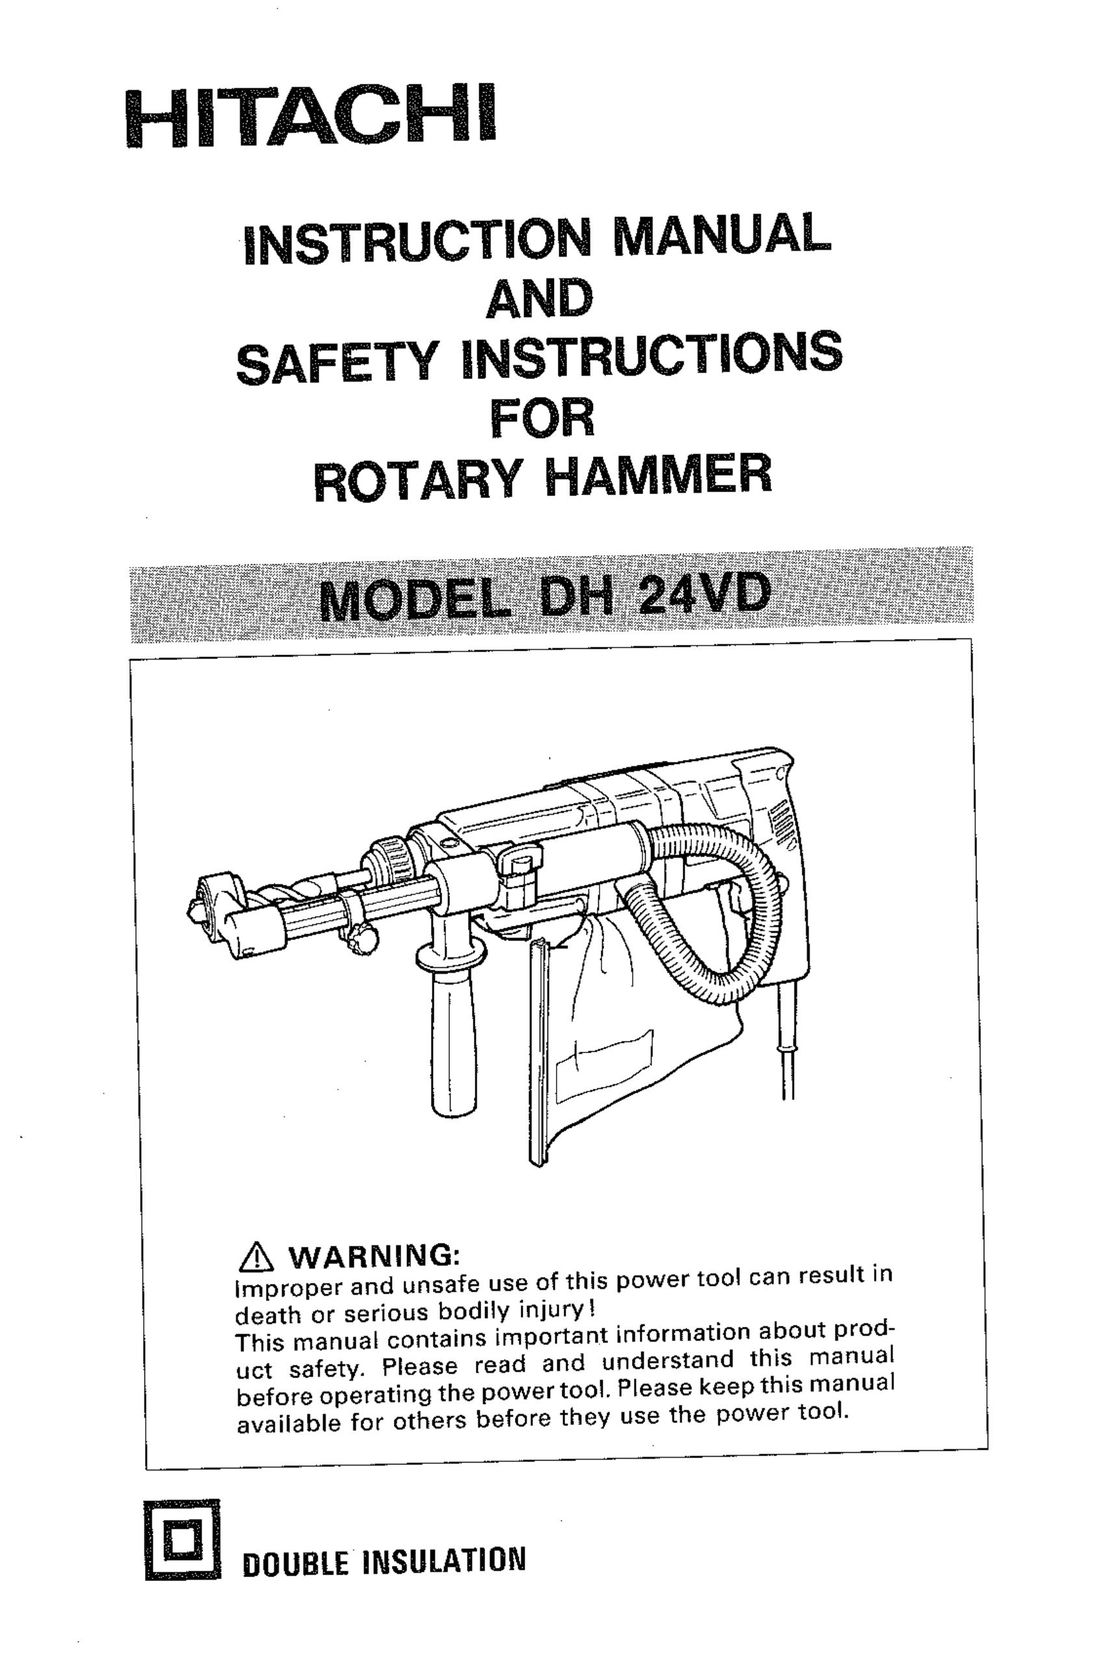 Hitachi DH 24VD Power Hammer User Manual